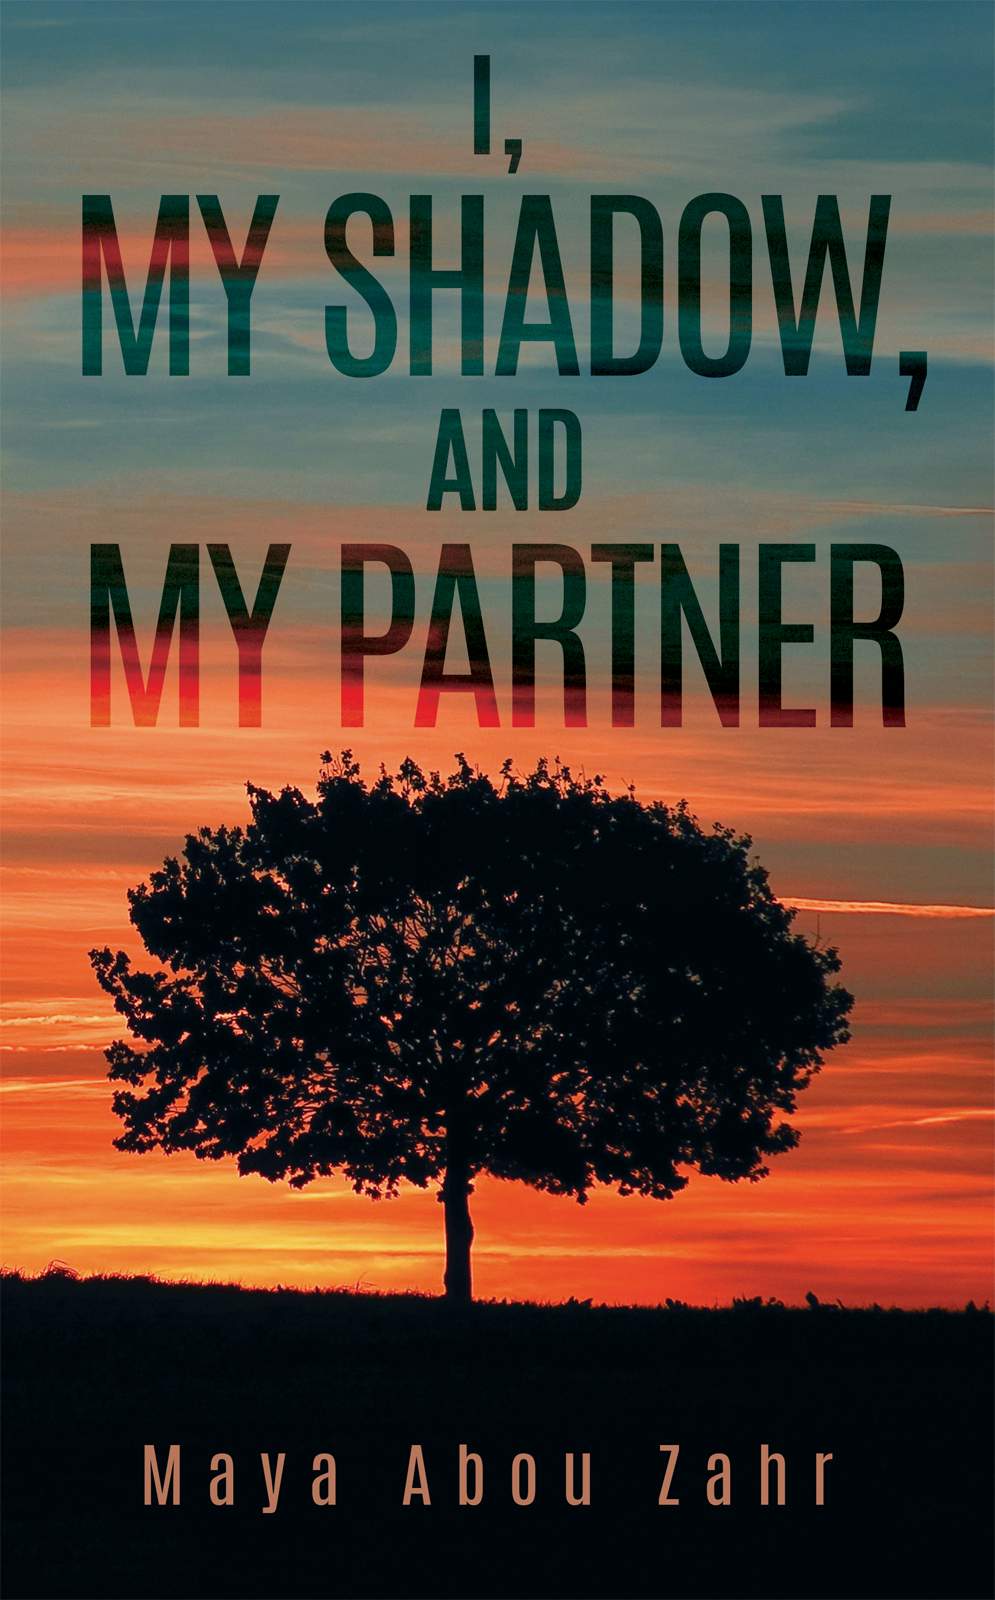 I, My Shadow, and My Partner